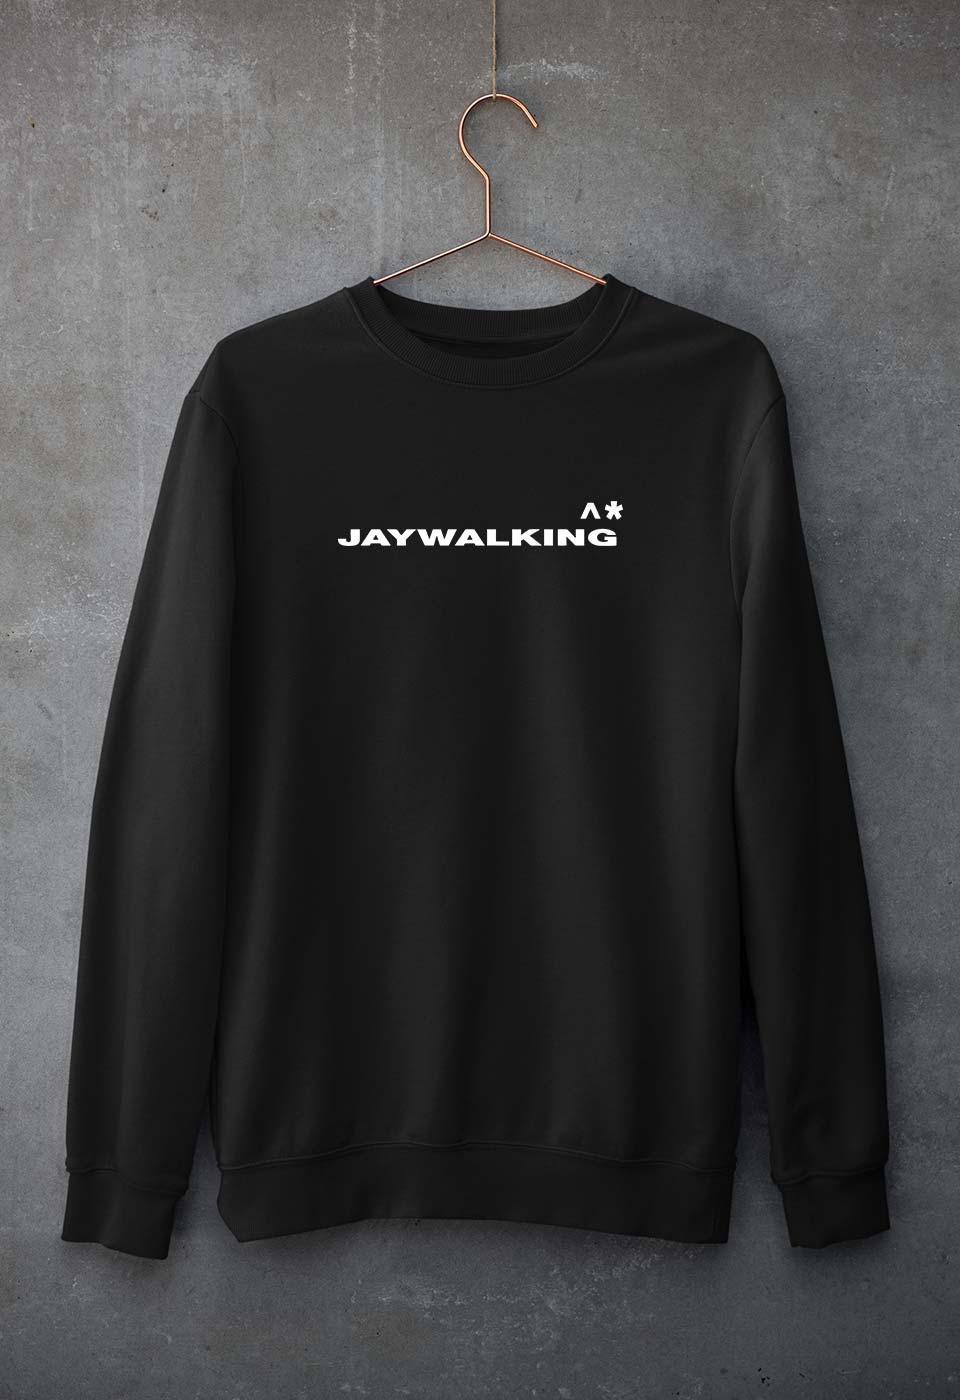 Jaywalking Unisex Sweatshirt for Men/Women